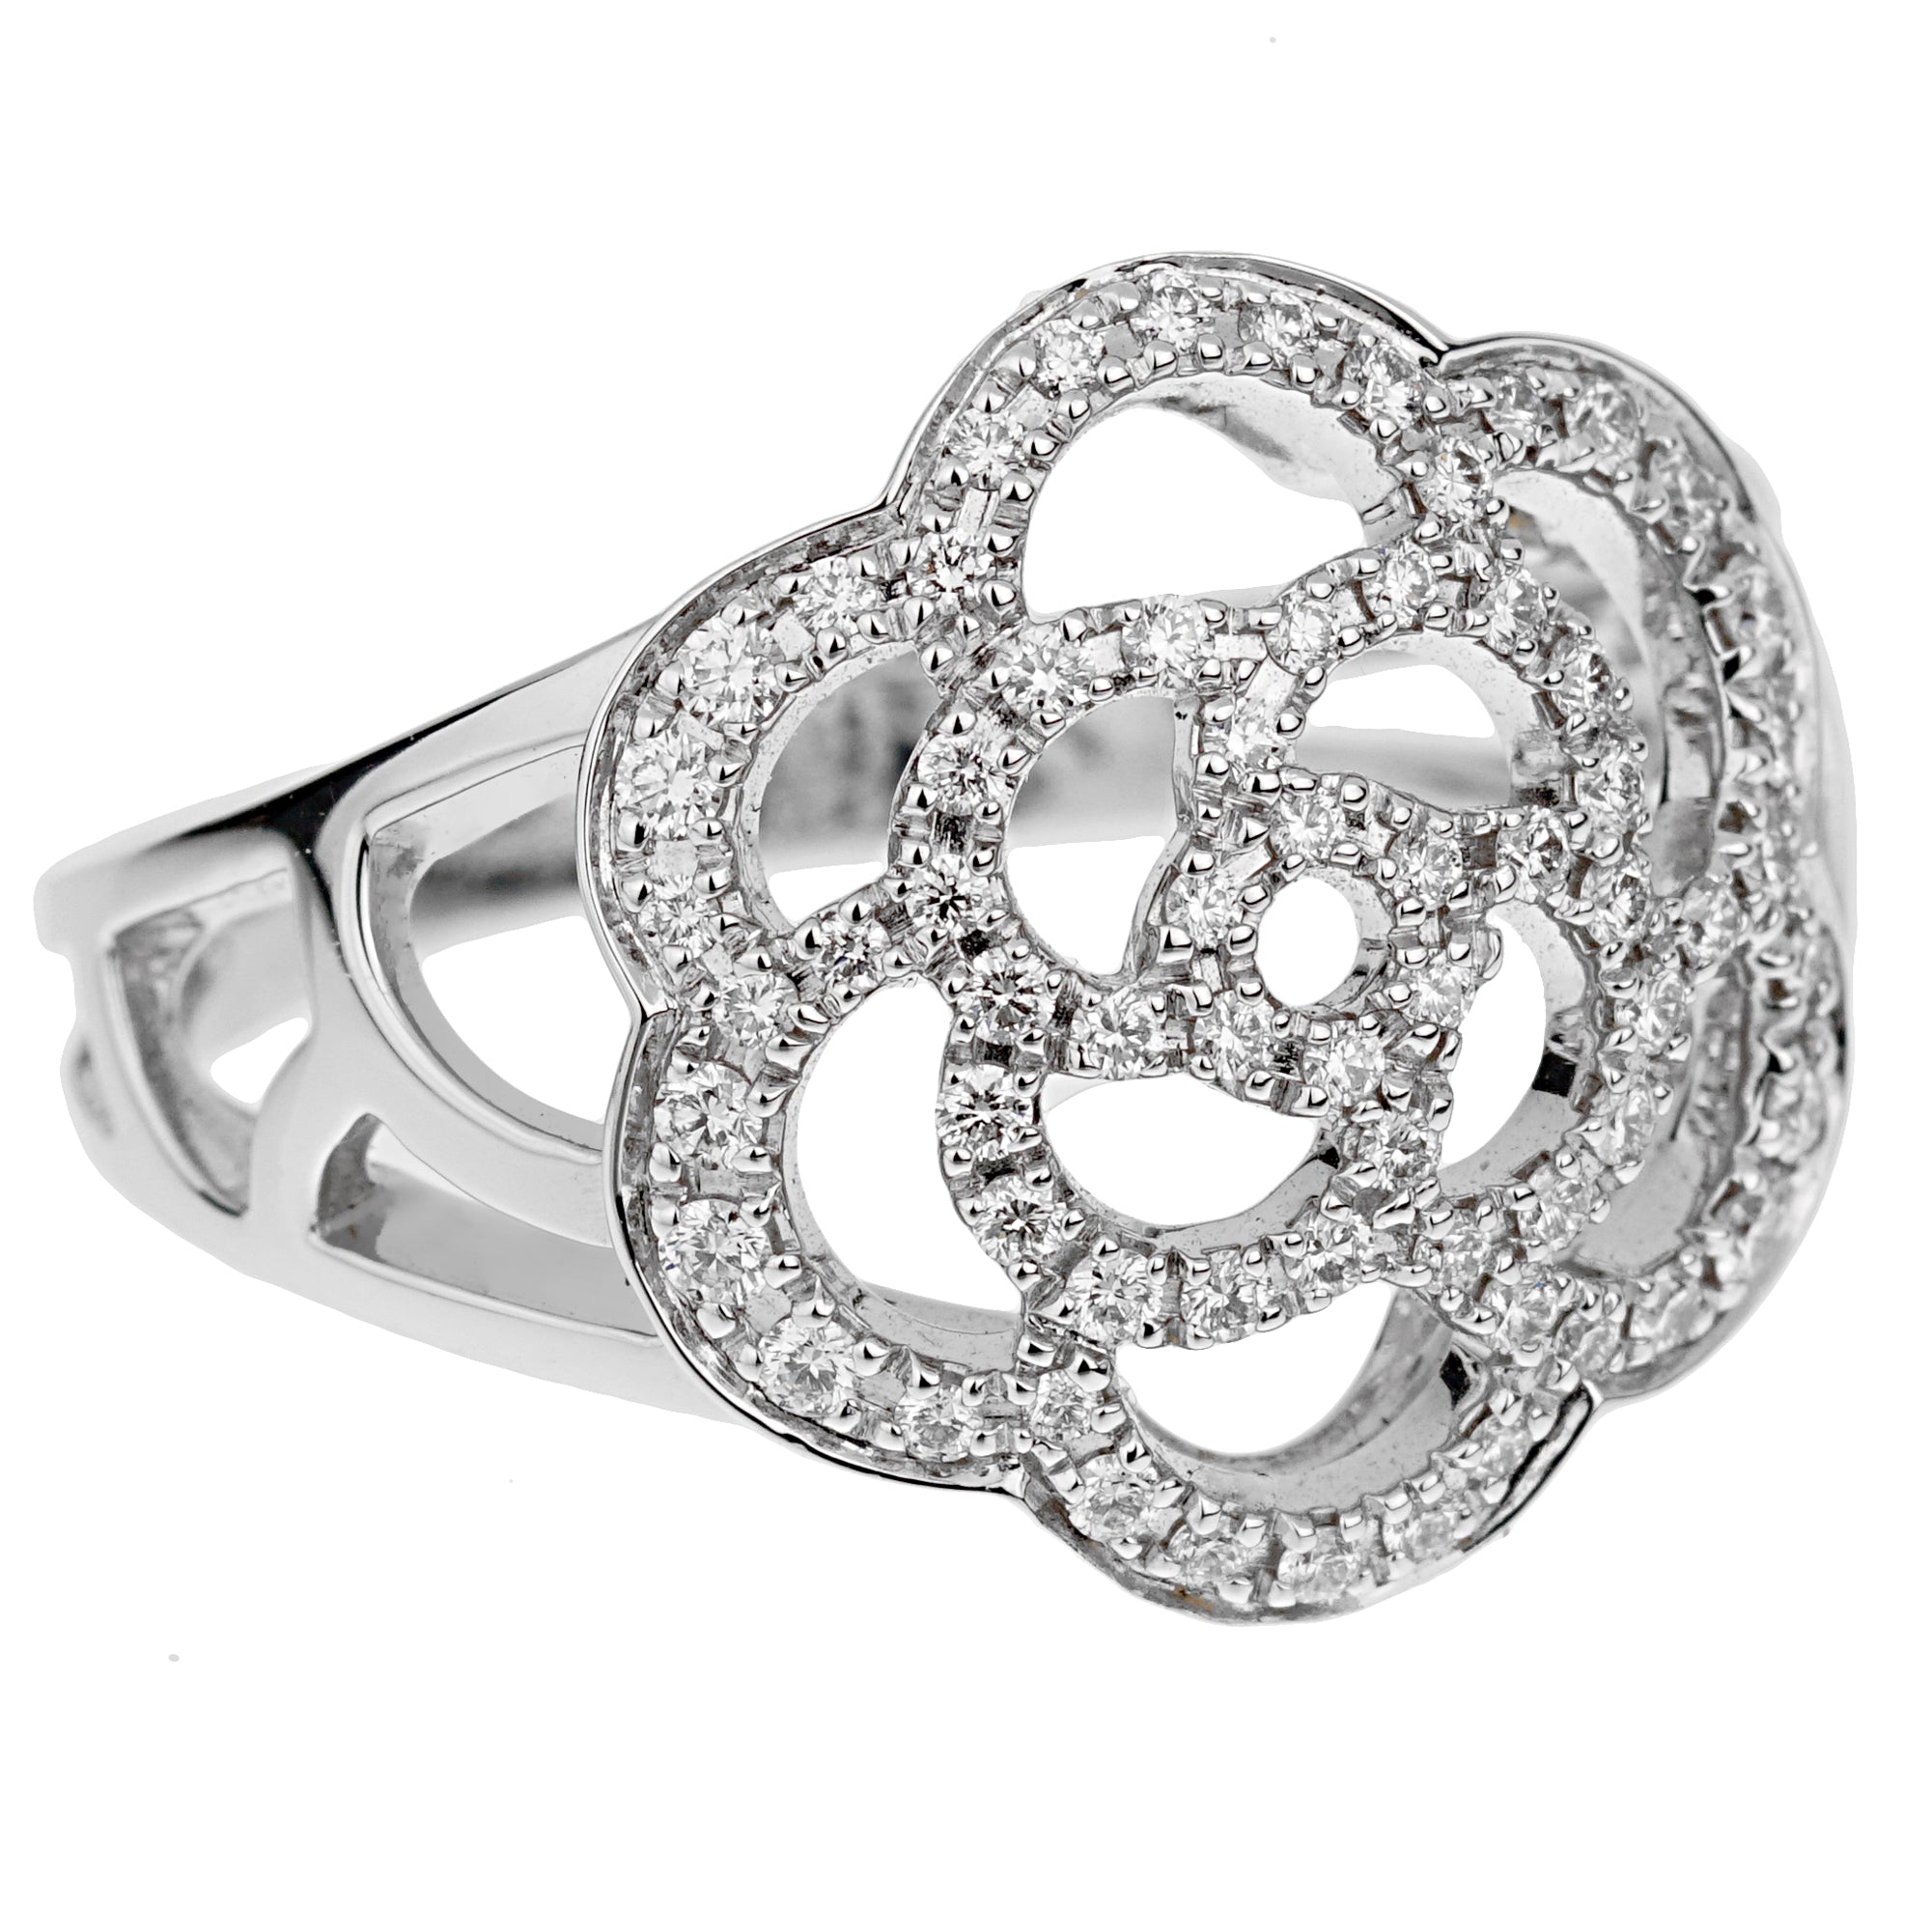 Chanel Camellia White Gold Diamond Cocktail Ring